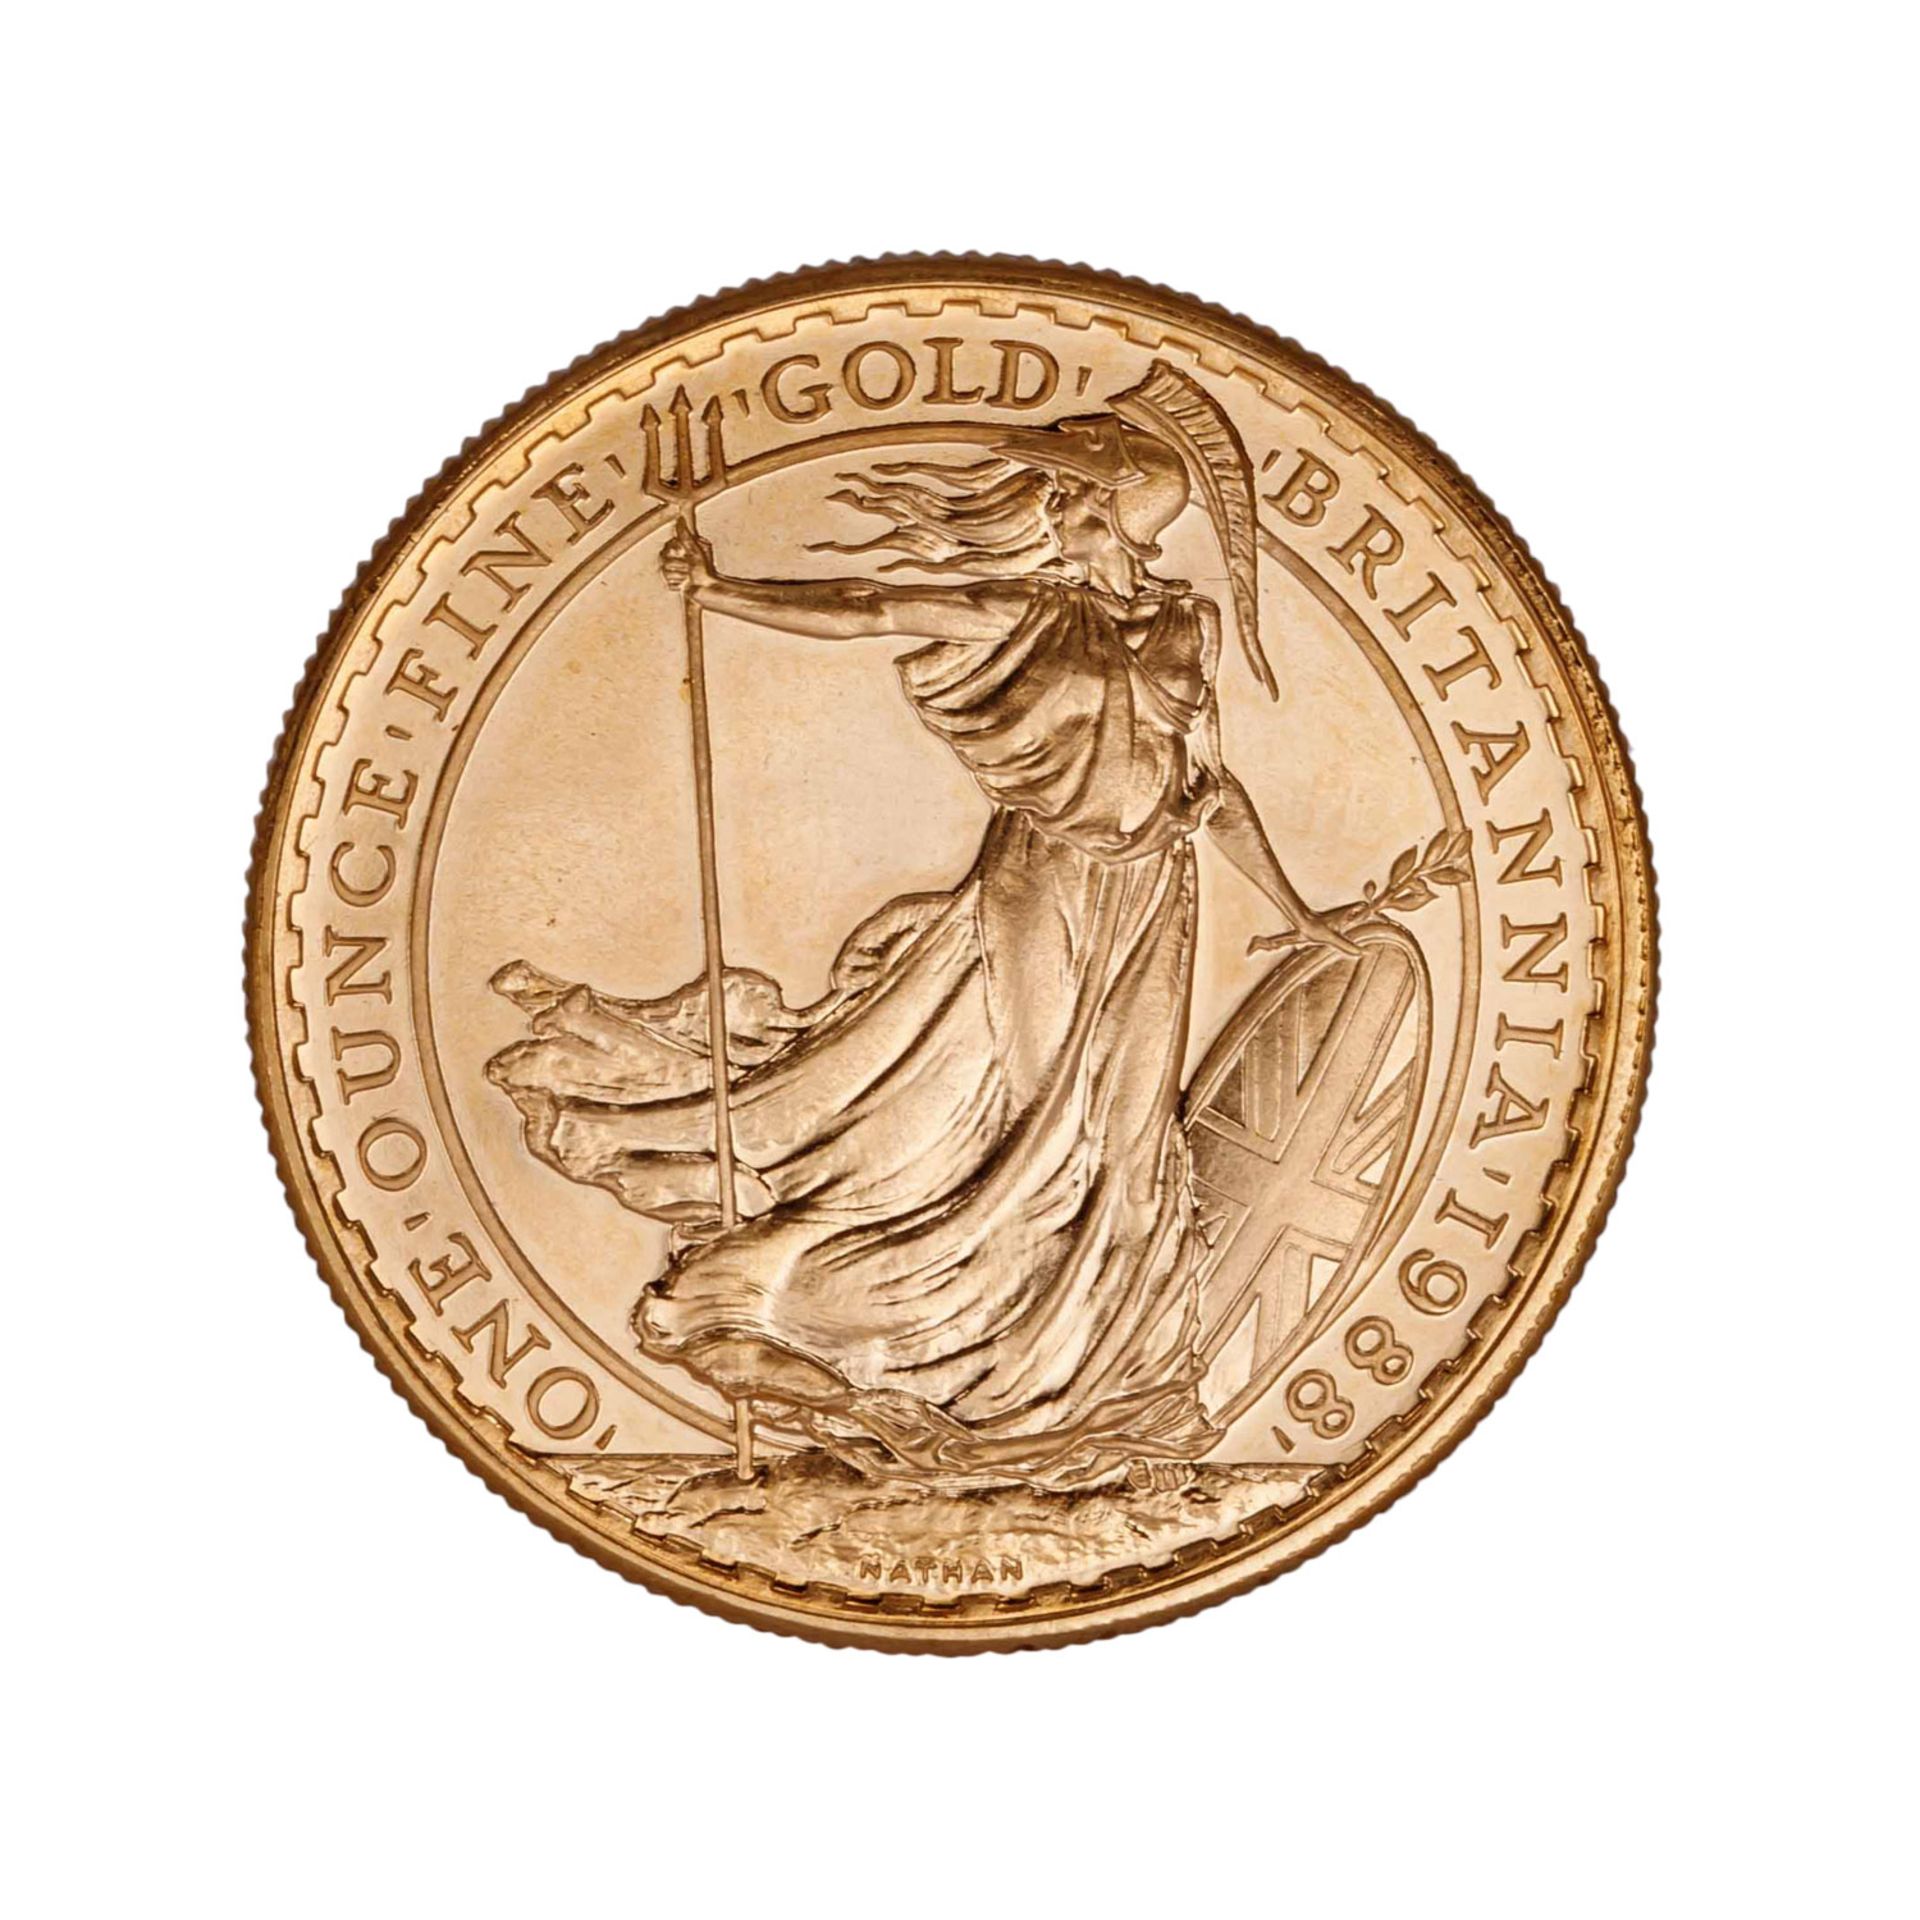 GB/GOLD - 100 Pounds 1988, Elizabeth II., - Image 2 of 2